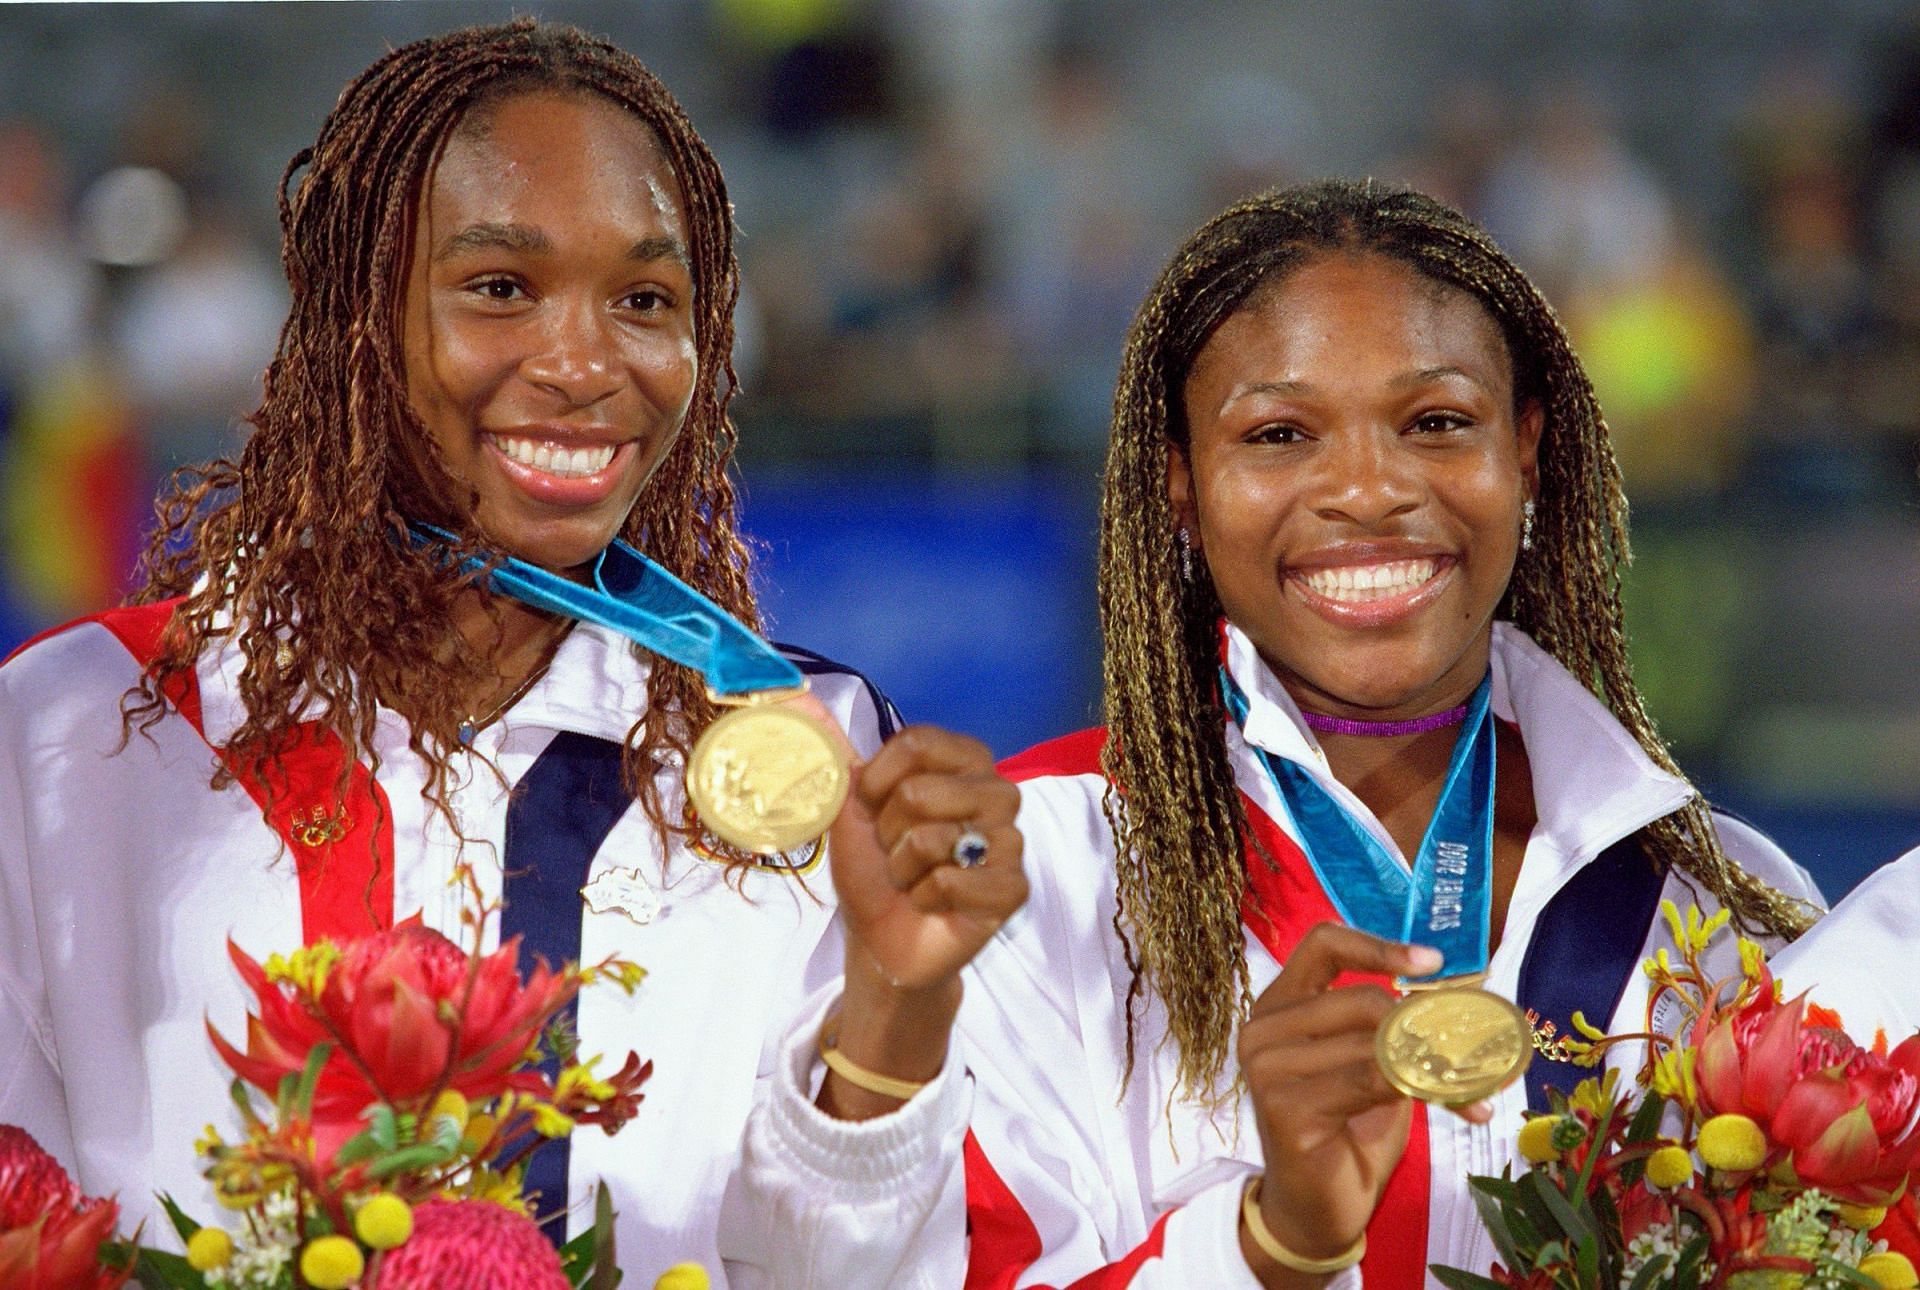 Venus and Serena Williams at the 2000 Sydney Olympics.